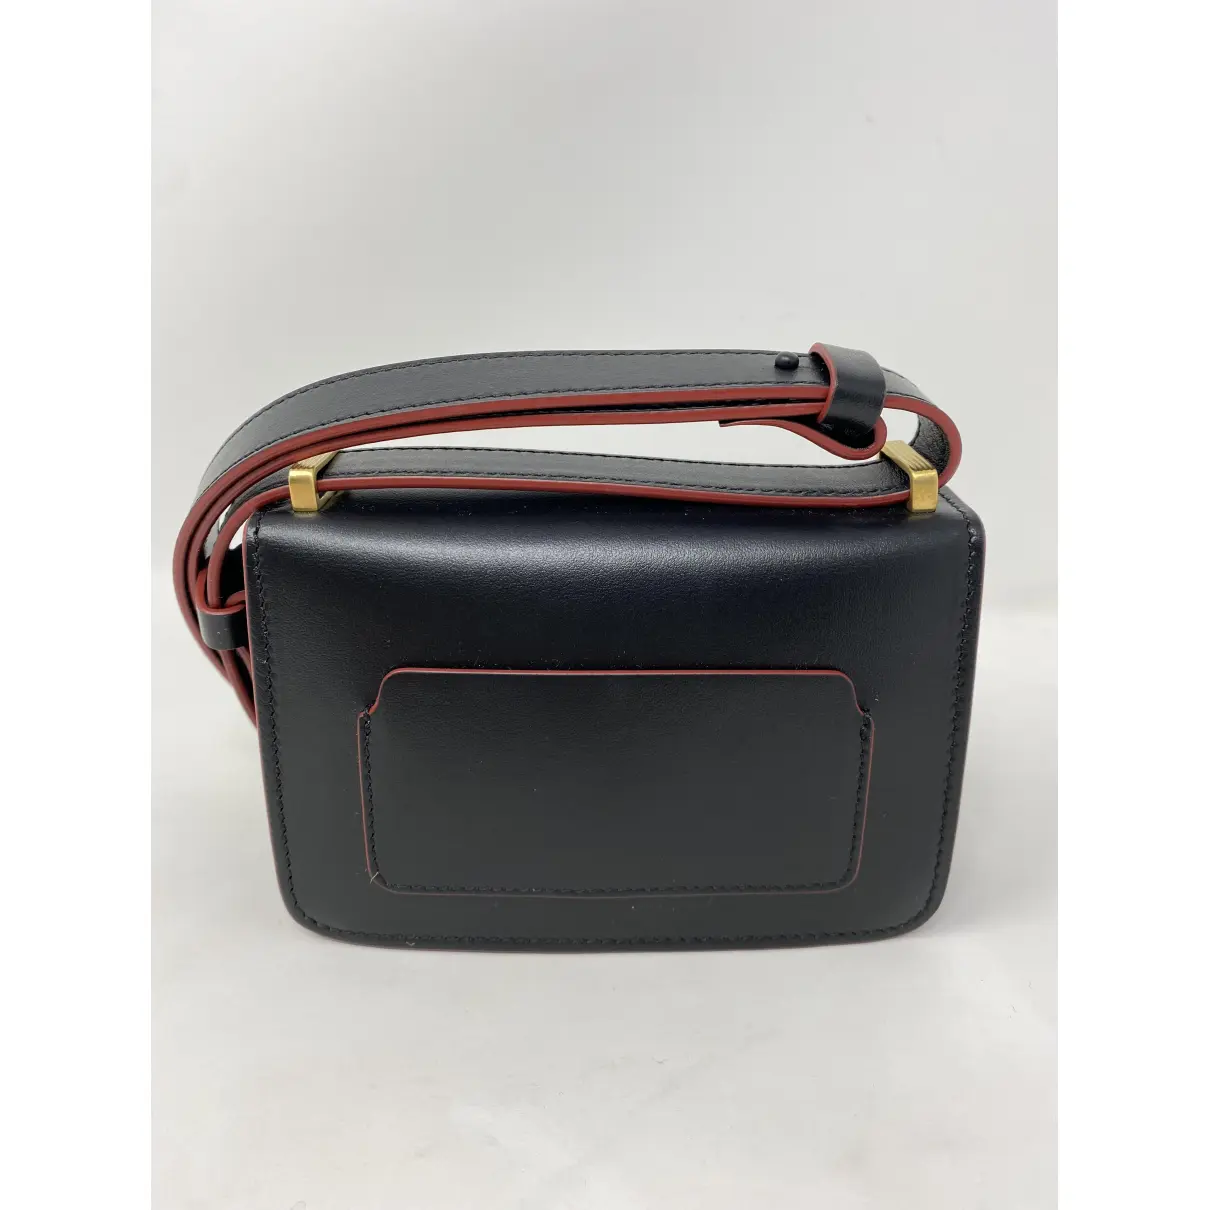 Buy Ports 1961 Leather crossbody bag online